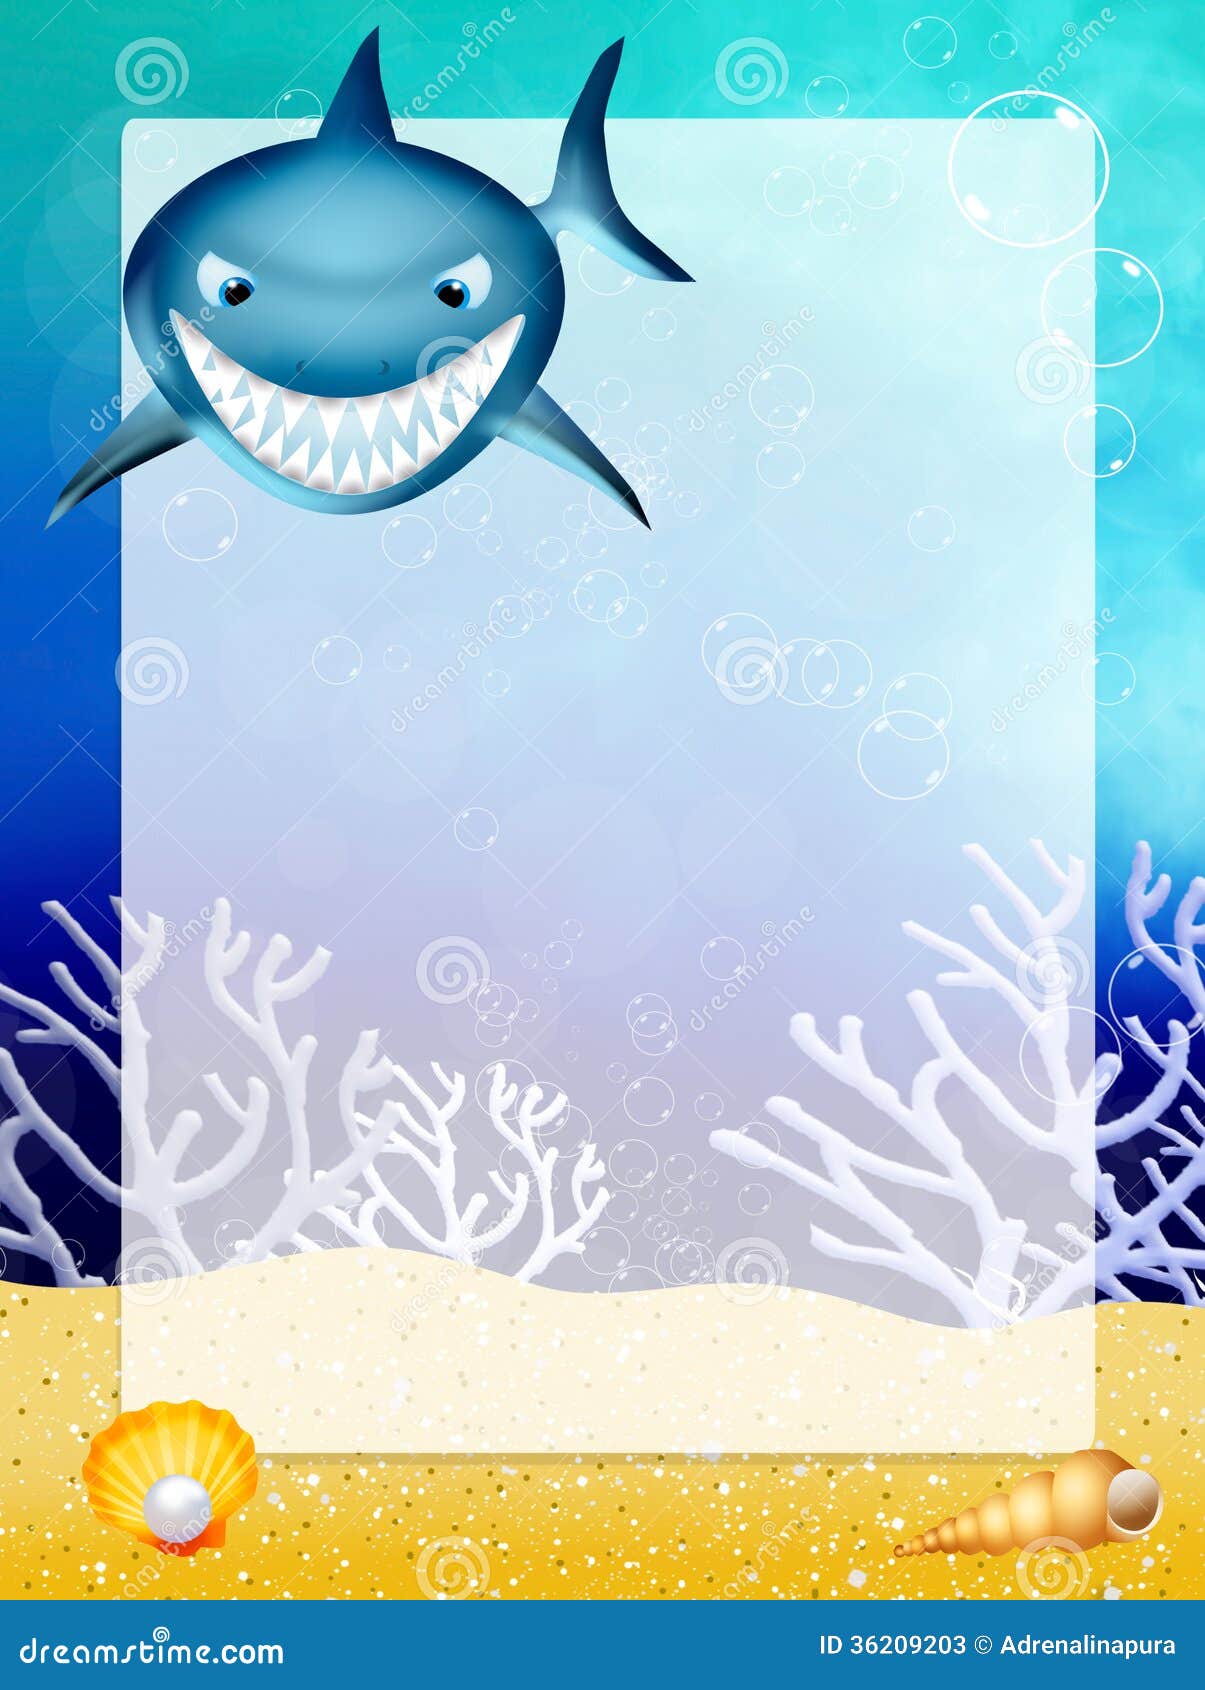 Shark with frame stock illustration. Illustration of frame - 36209203